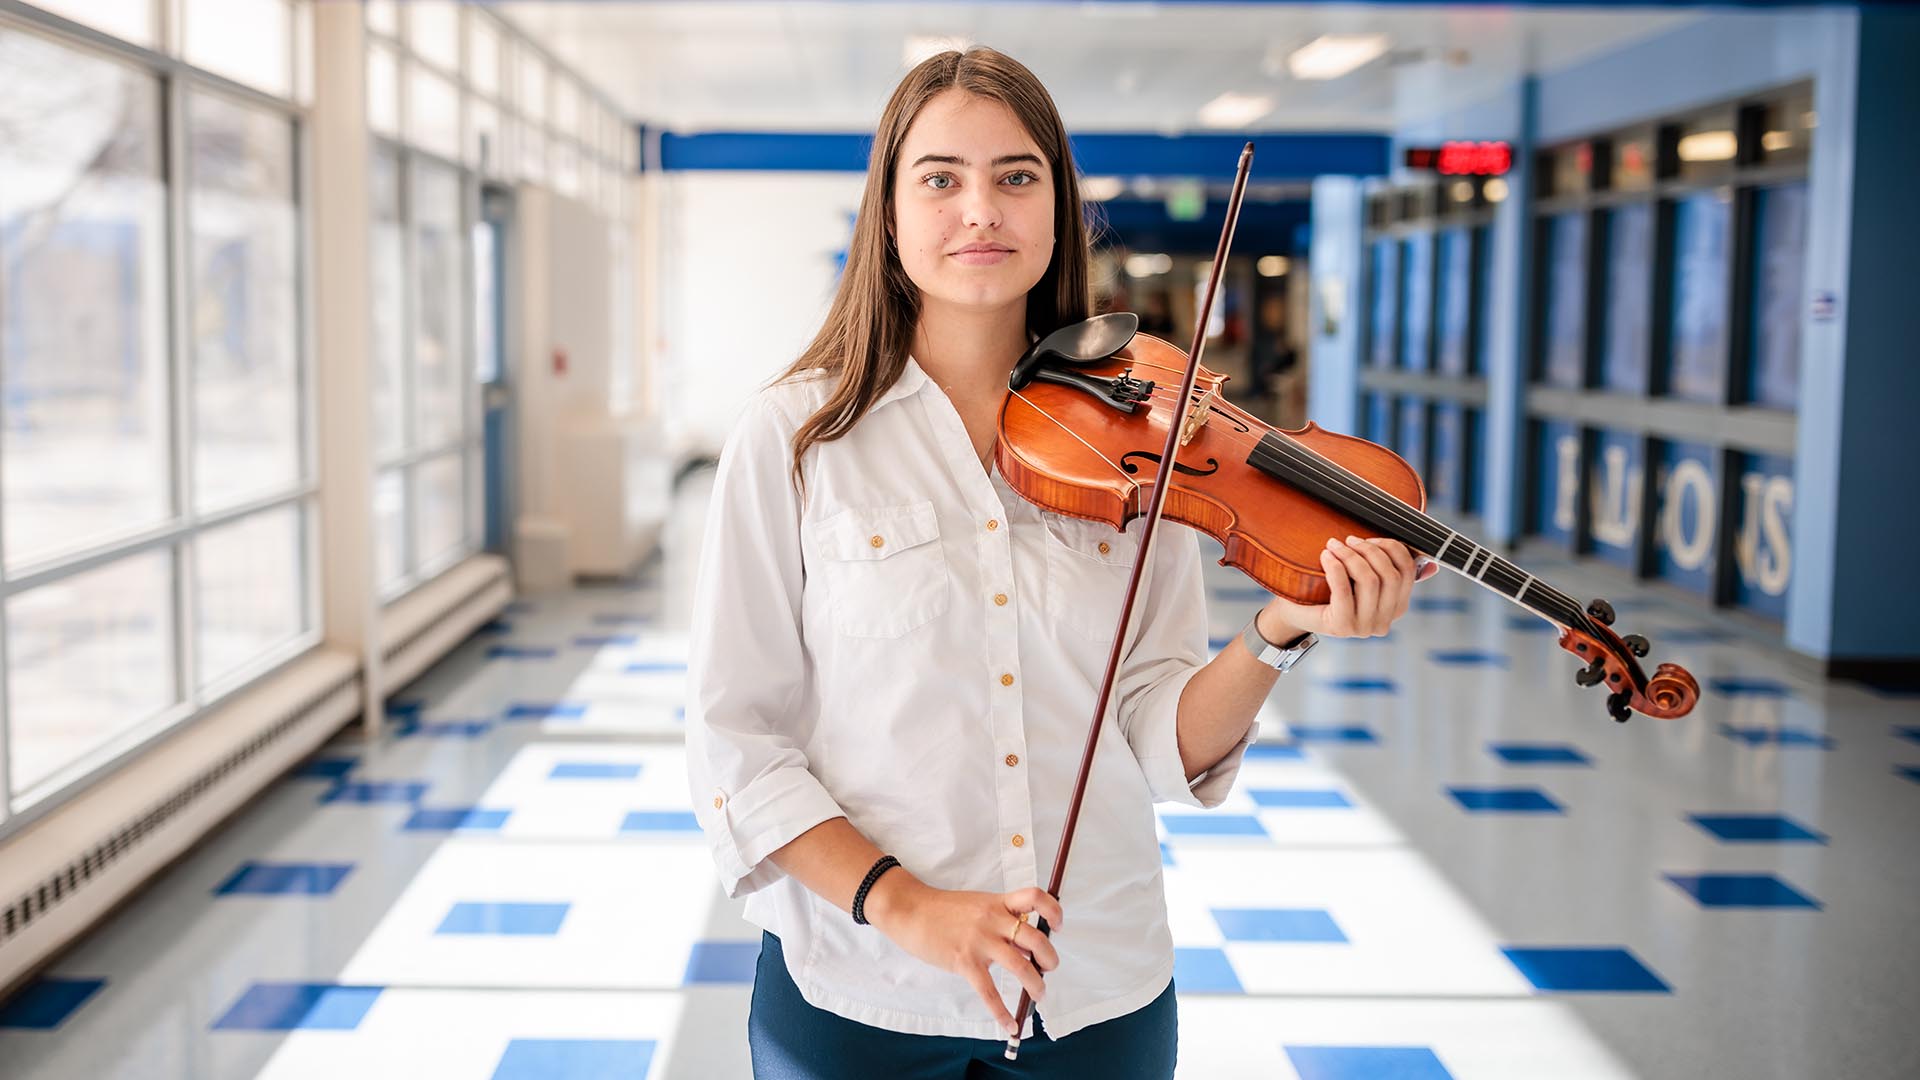 MSU Denver’s Music Education major, Hannah Baty